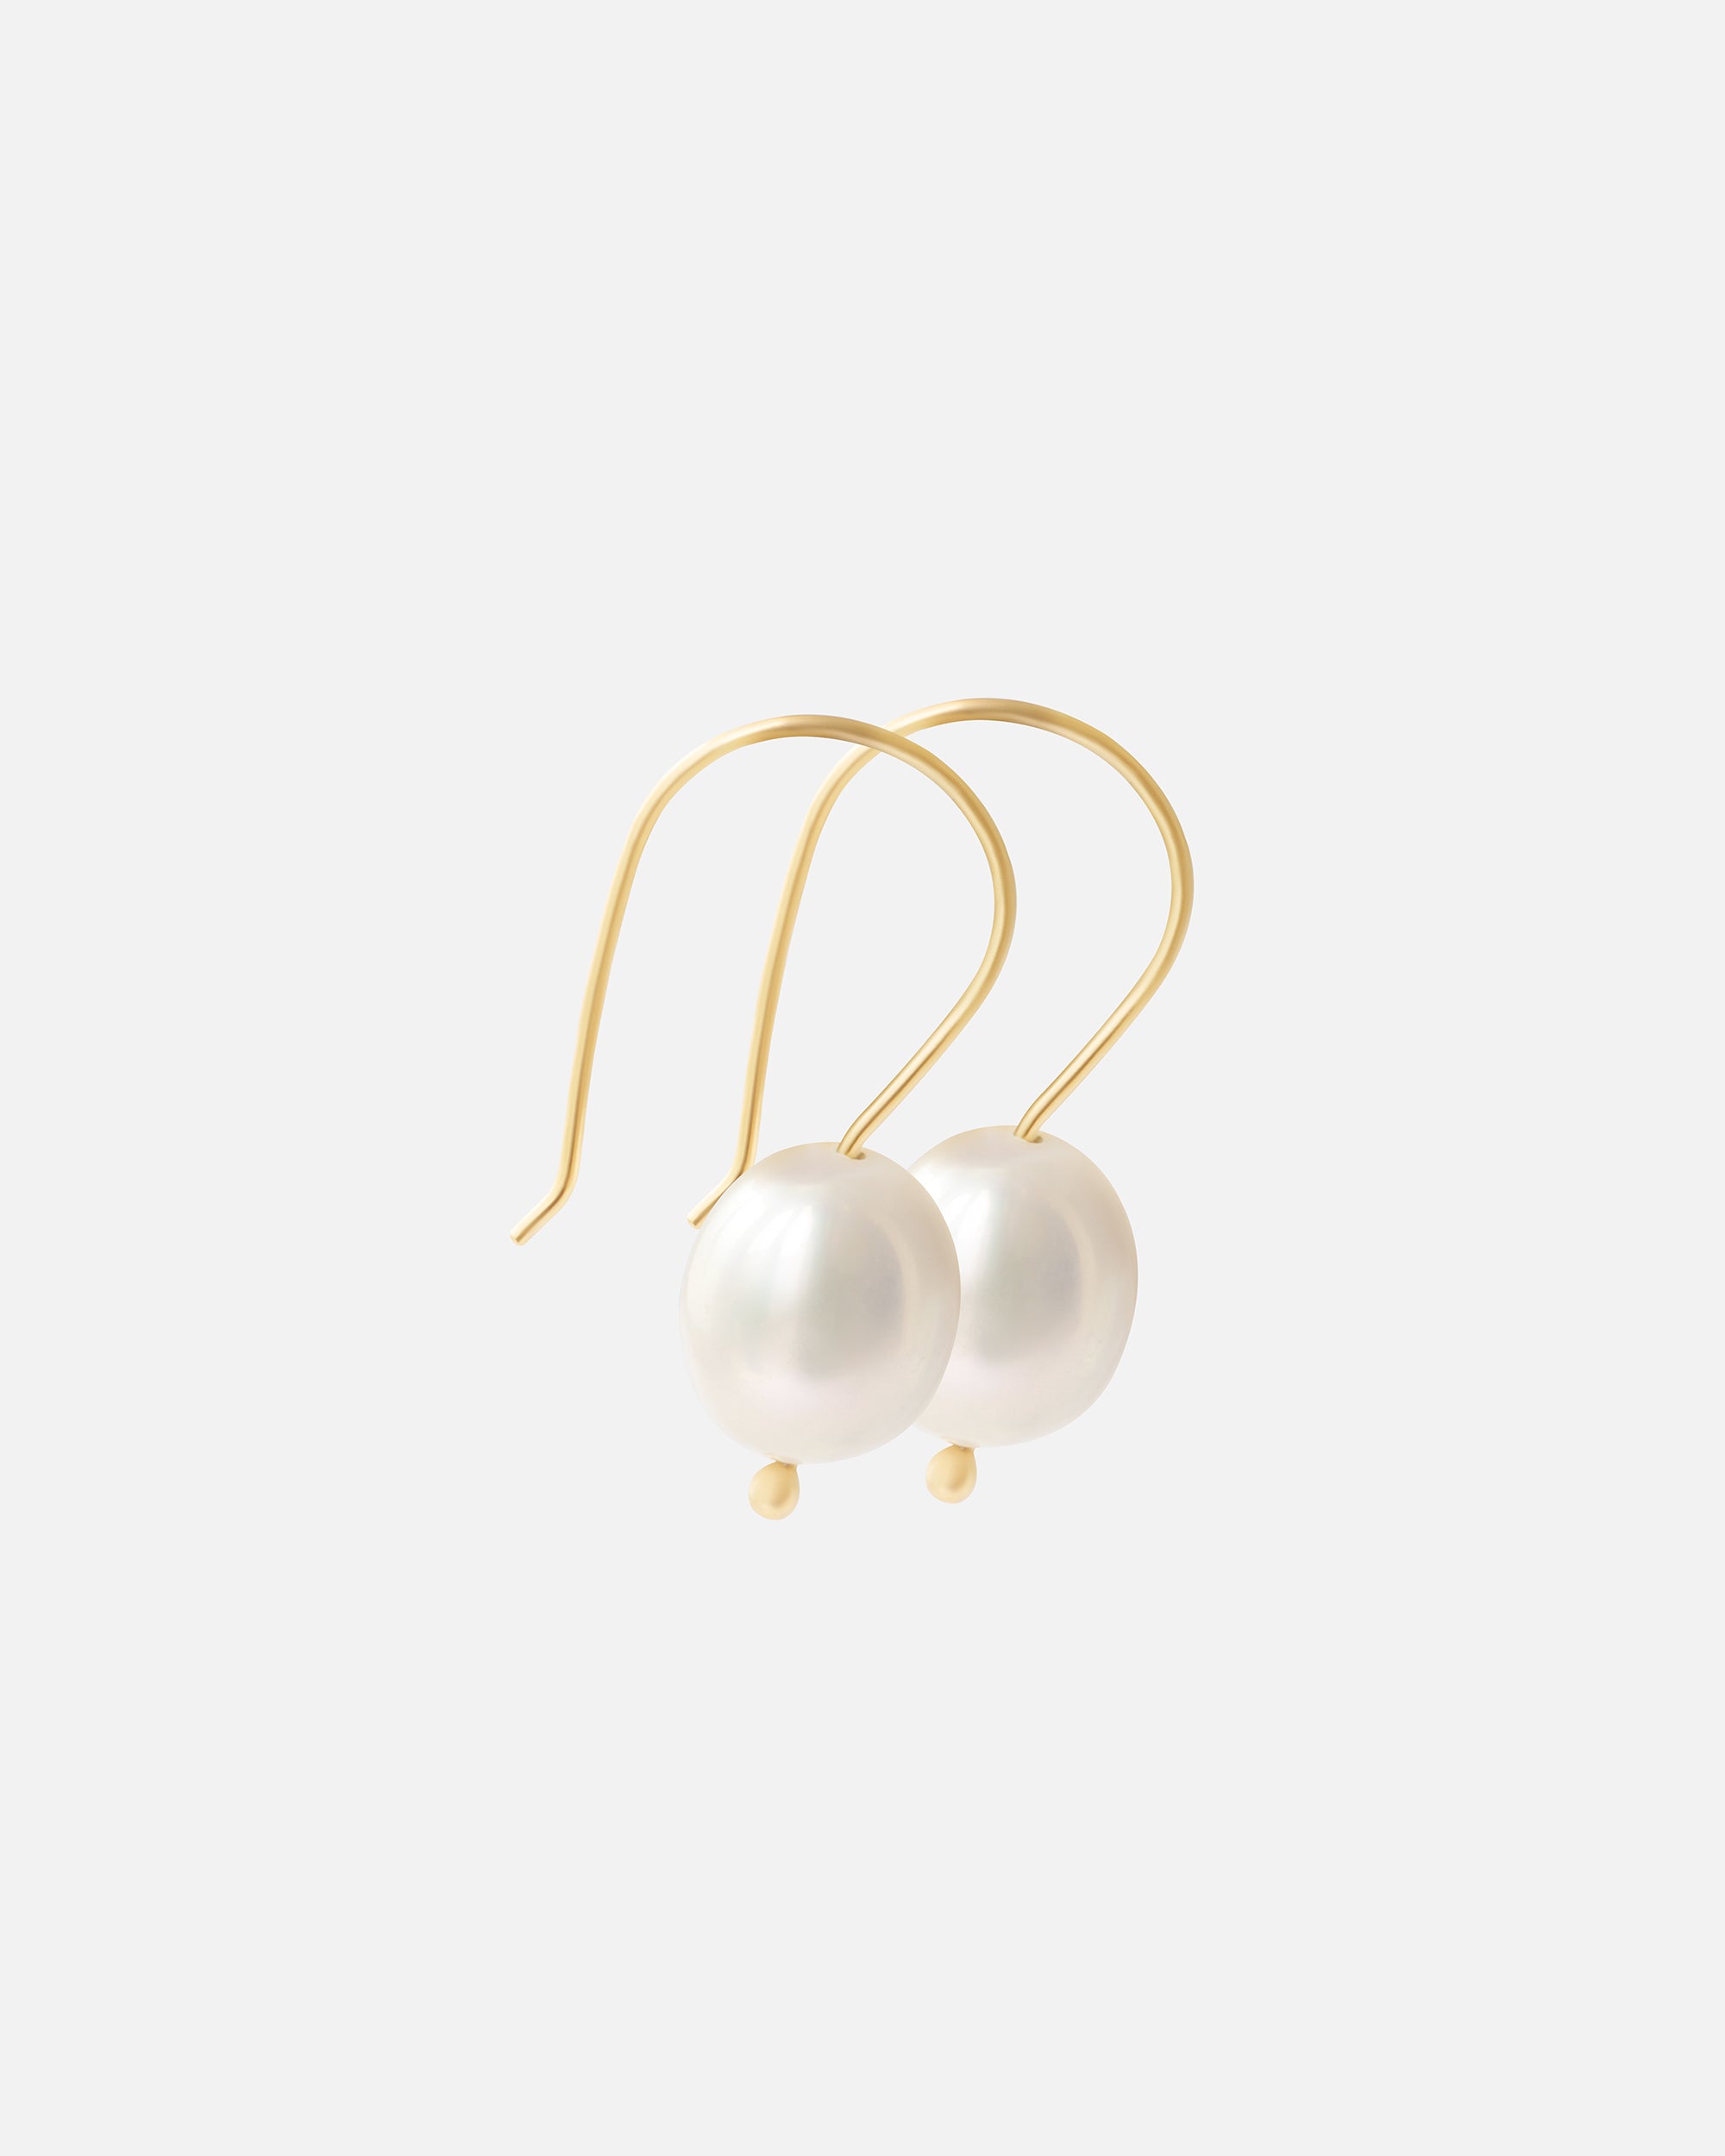 White Pearl / Drop Earrings By Tricia Kirkland